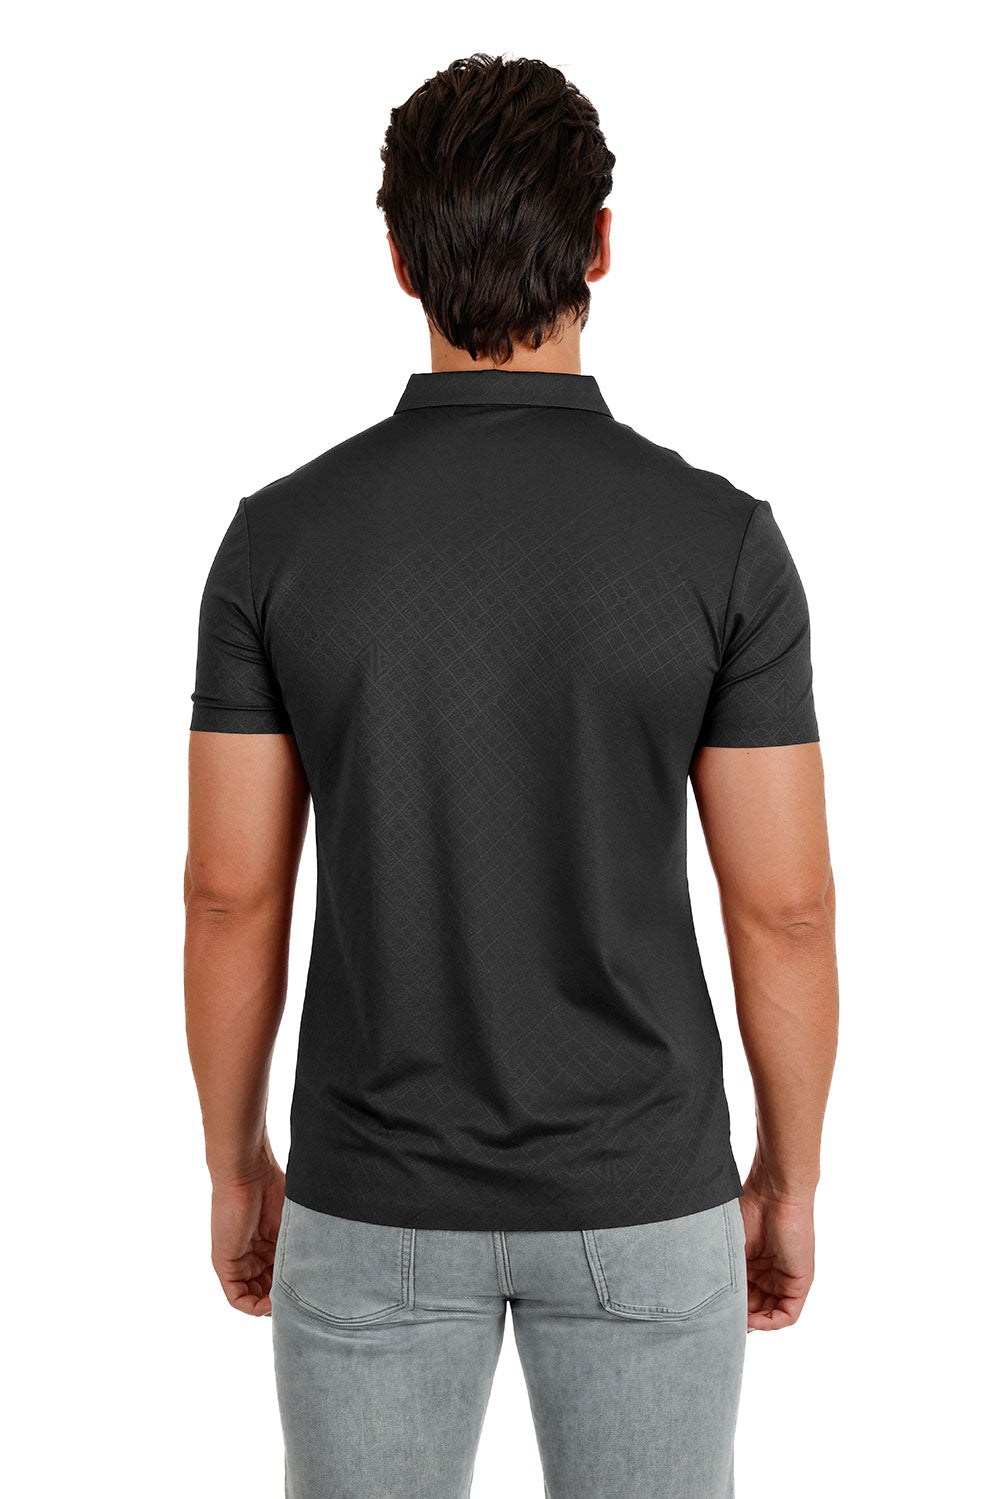 Barabas Men's Premium Solid Diamond Polo Short Sleeve Shirts 3P07 Black